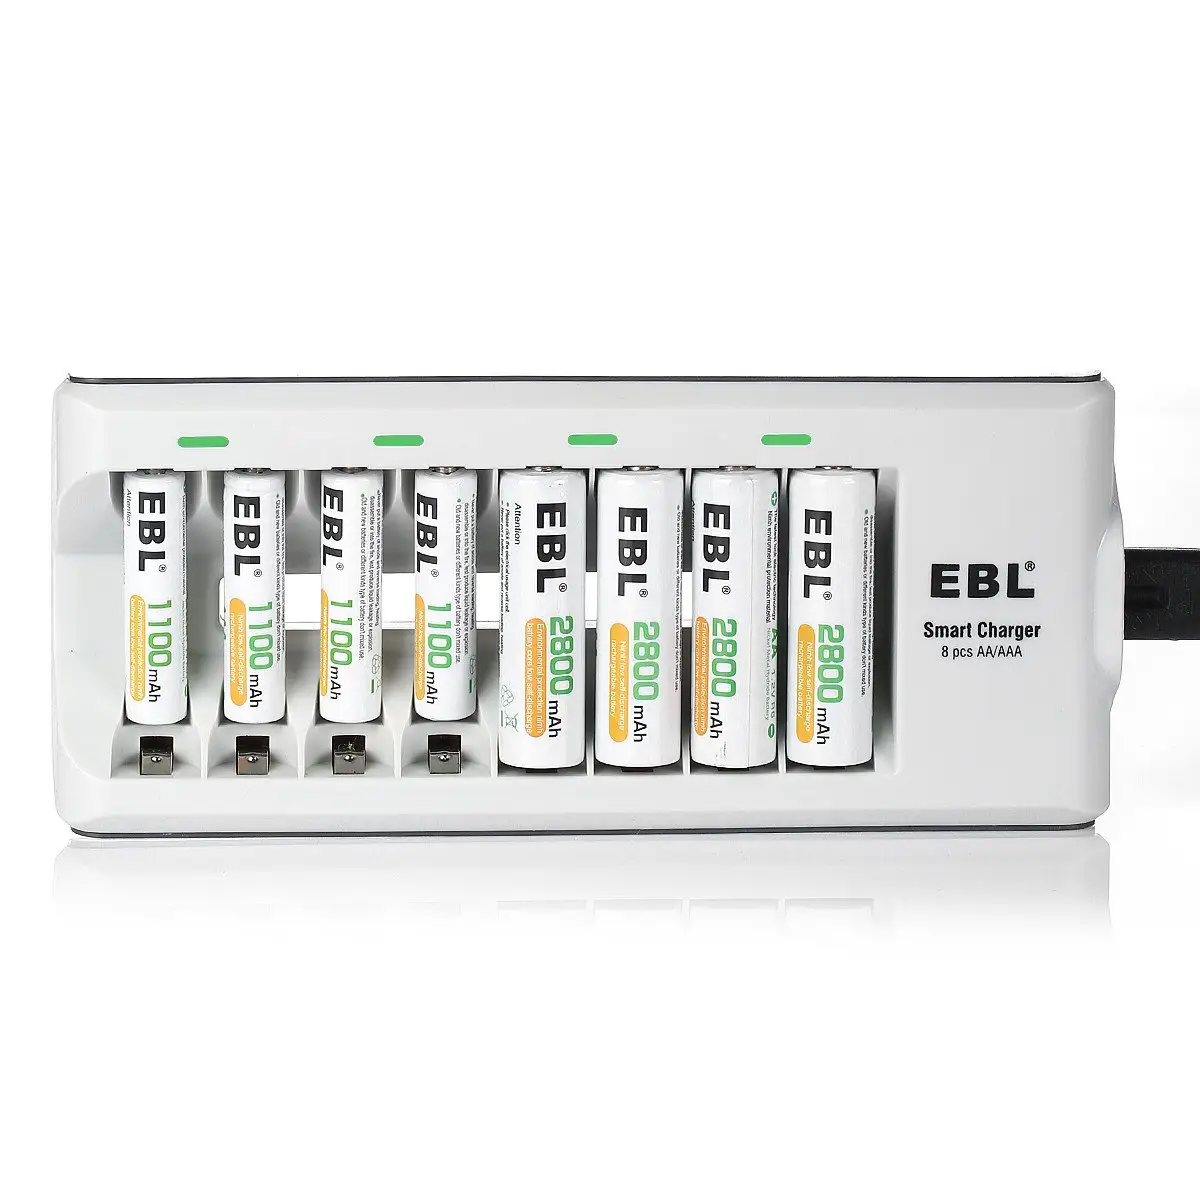 Caricabatterie EBL 8Bay con batterie AA 2800mAh batterie ricaricabili AAA di lunga durata